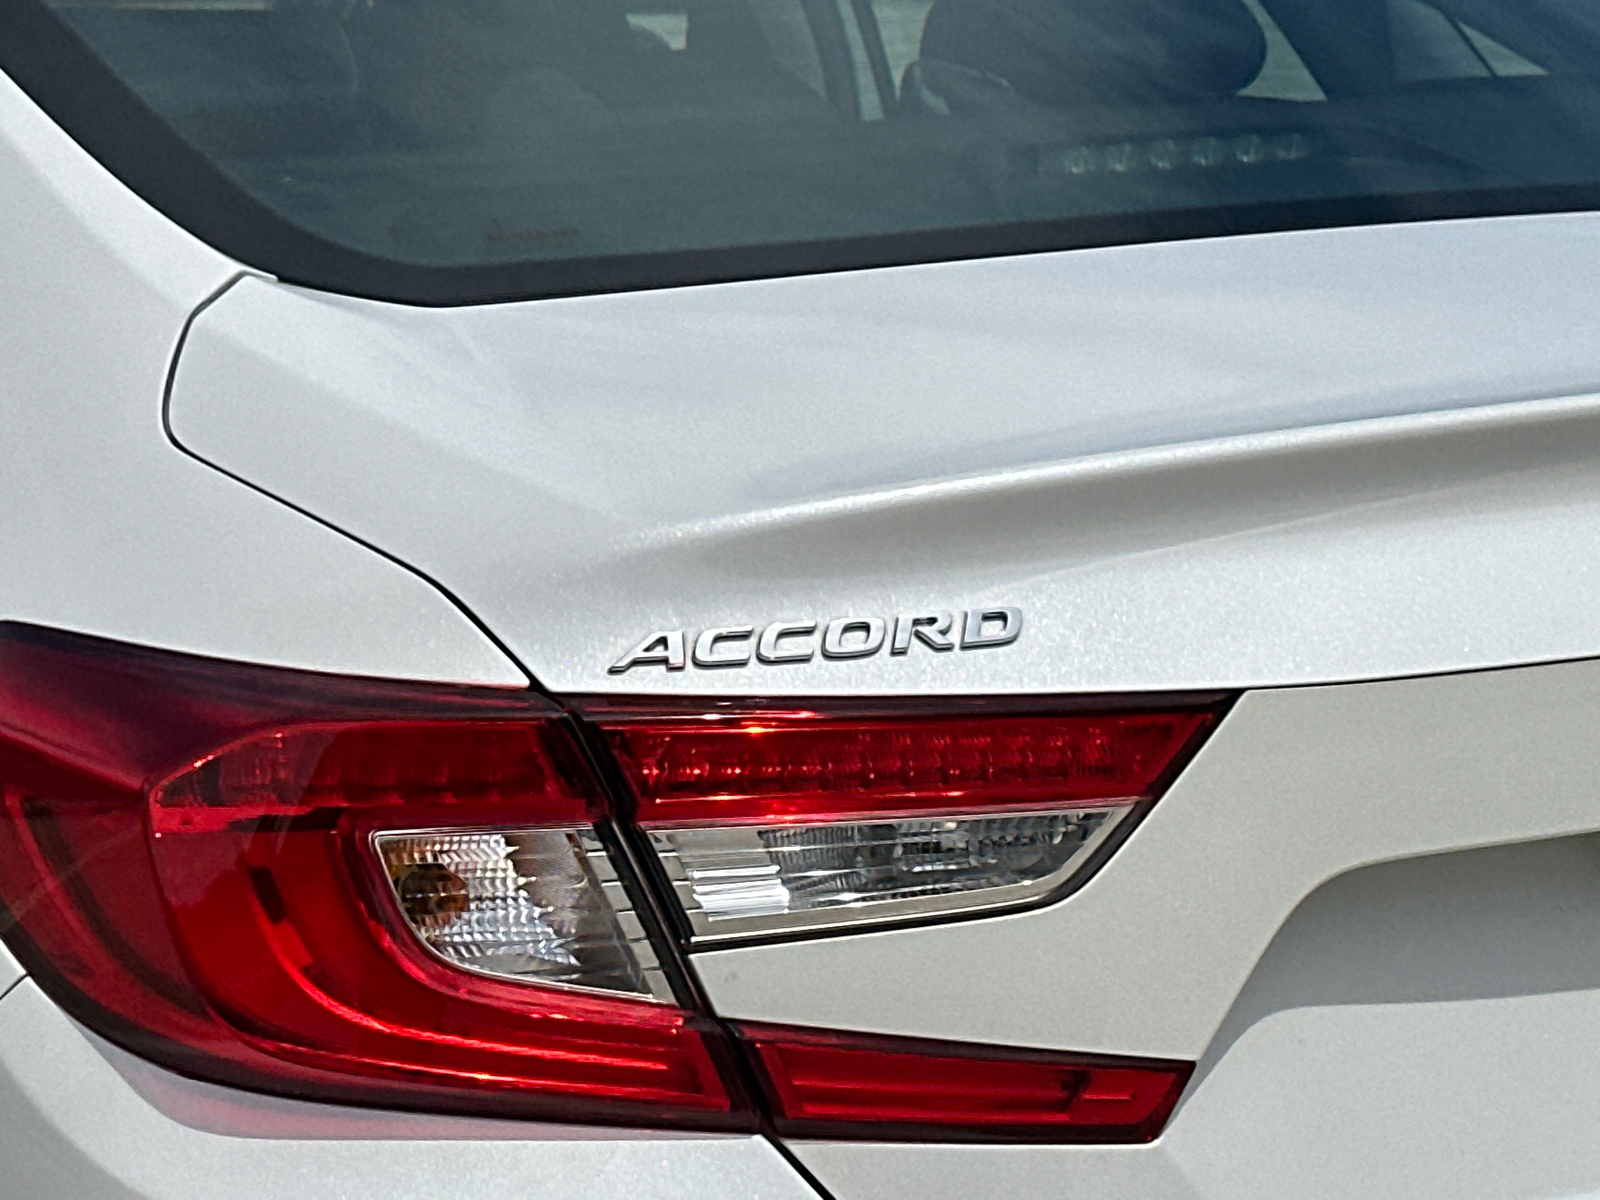 2019 Honda Accord EX 7